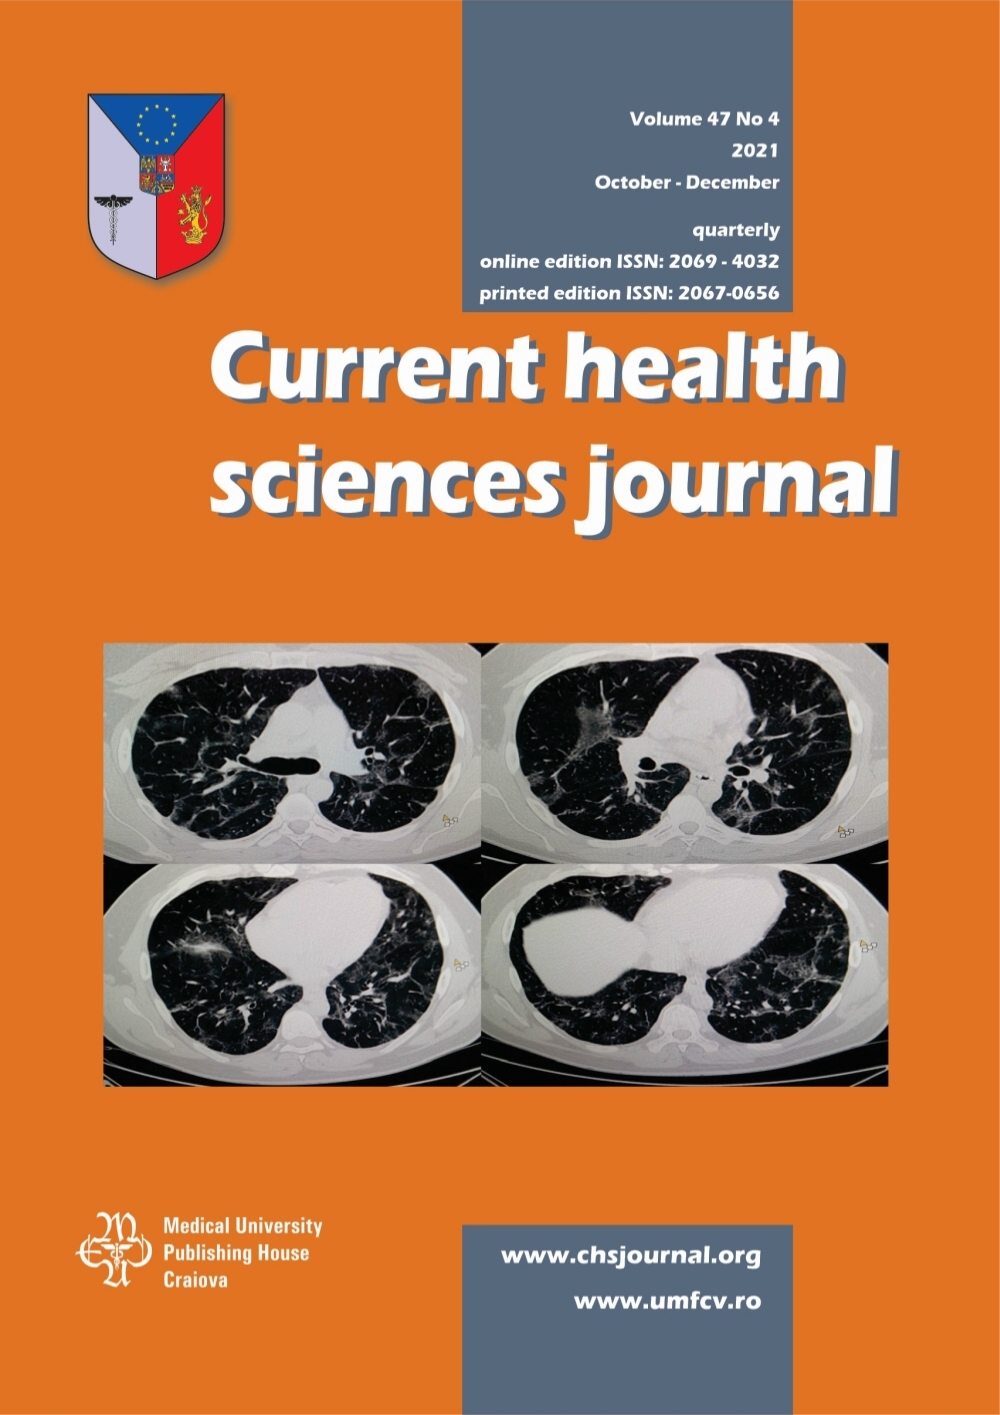 Current Health Sciences Journal, vol. 47 no. 4, 2021